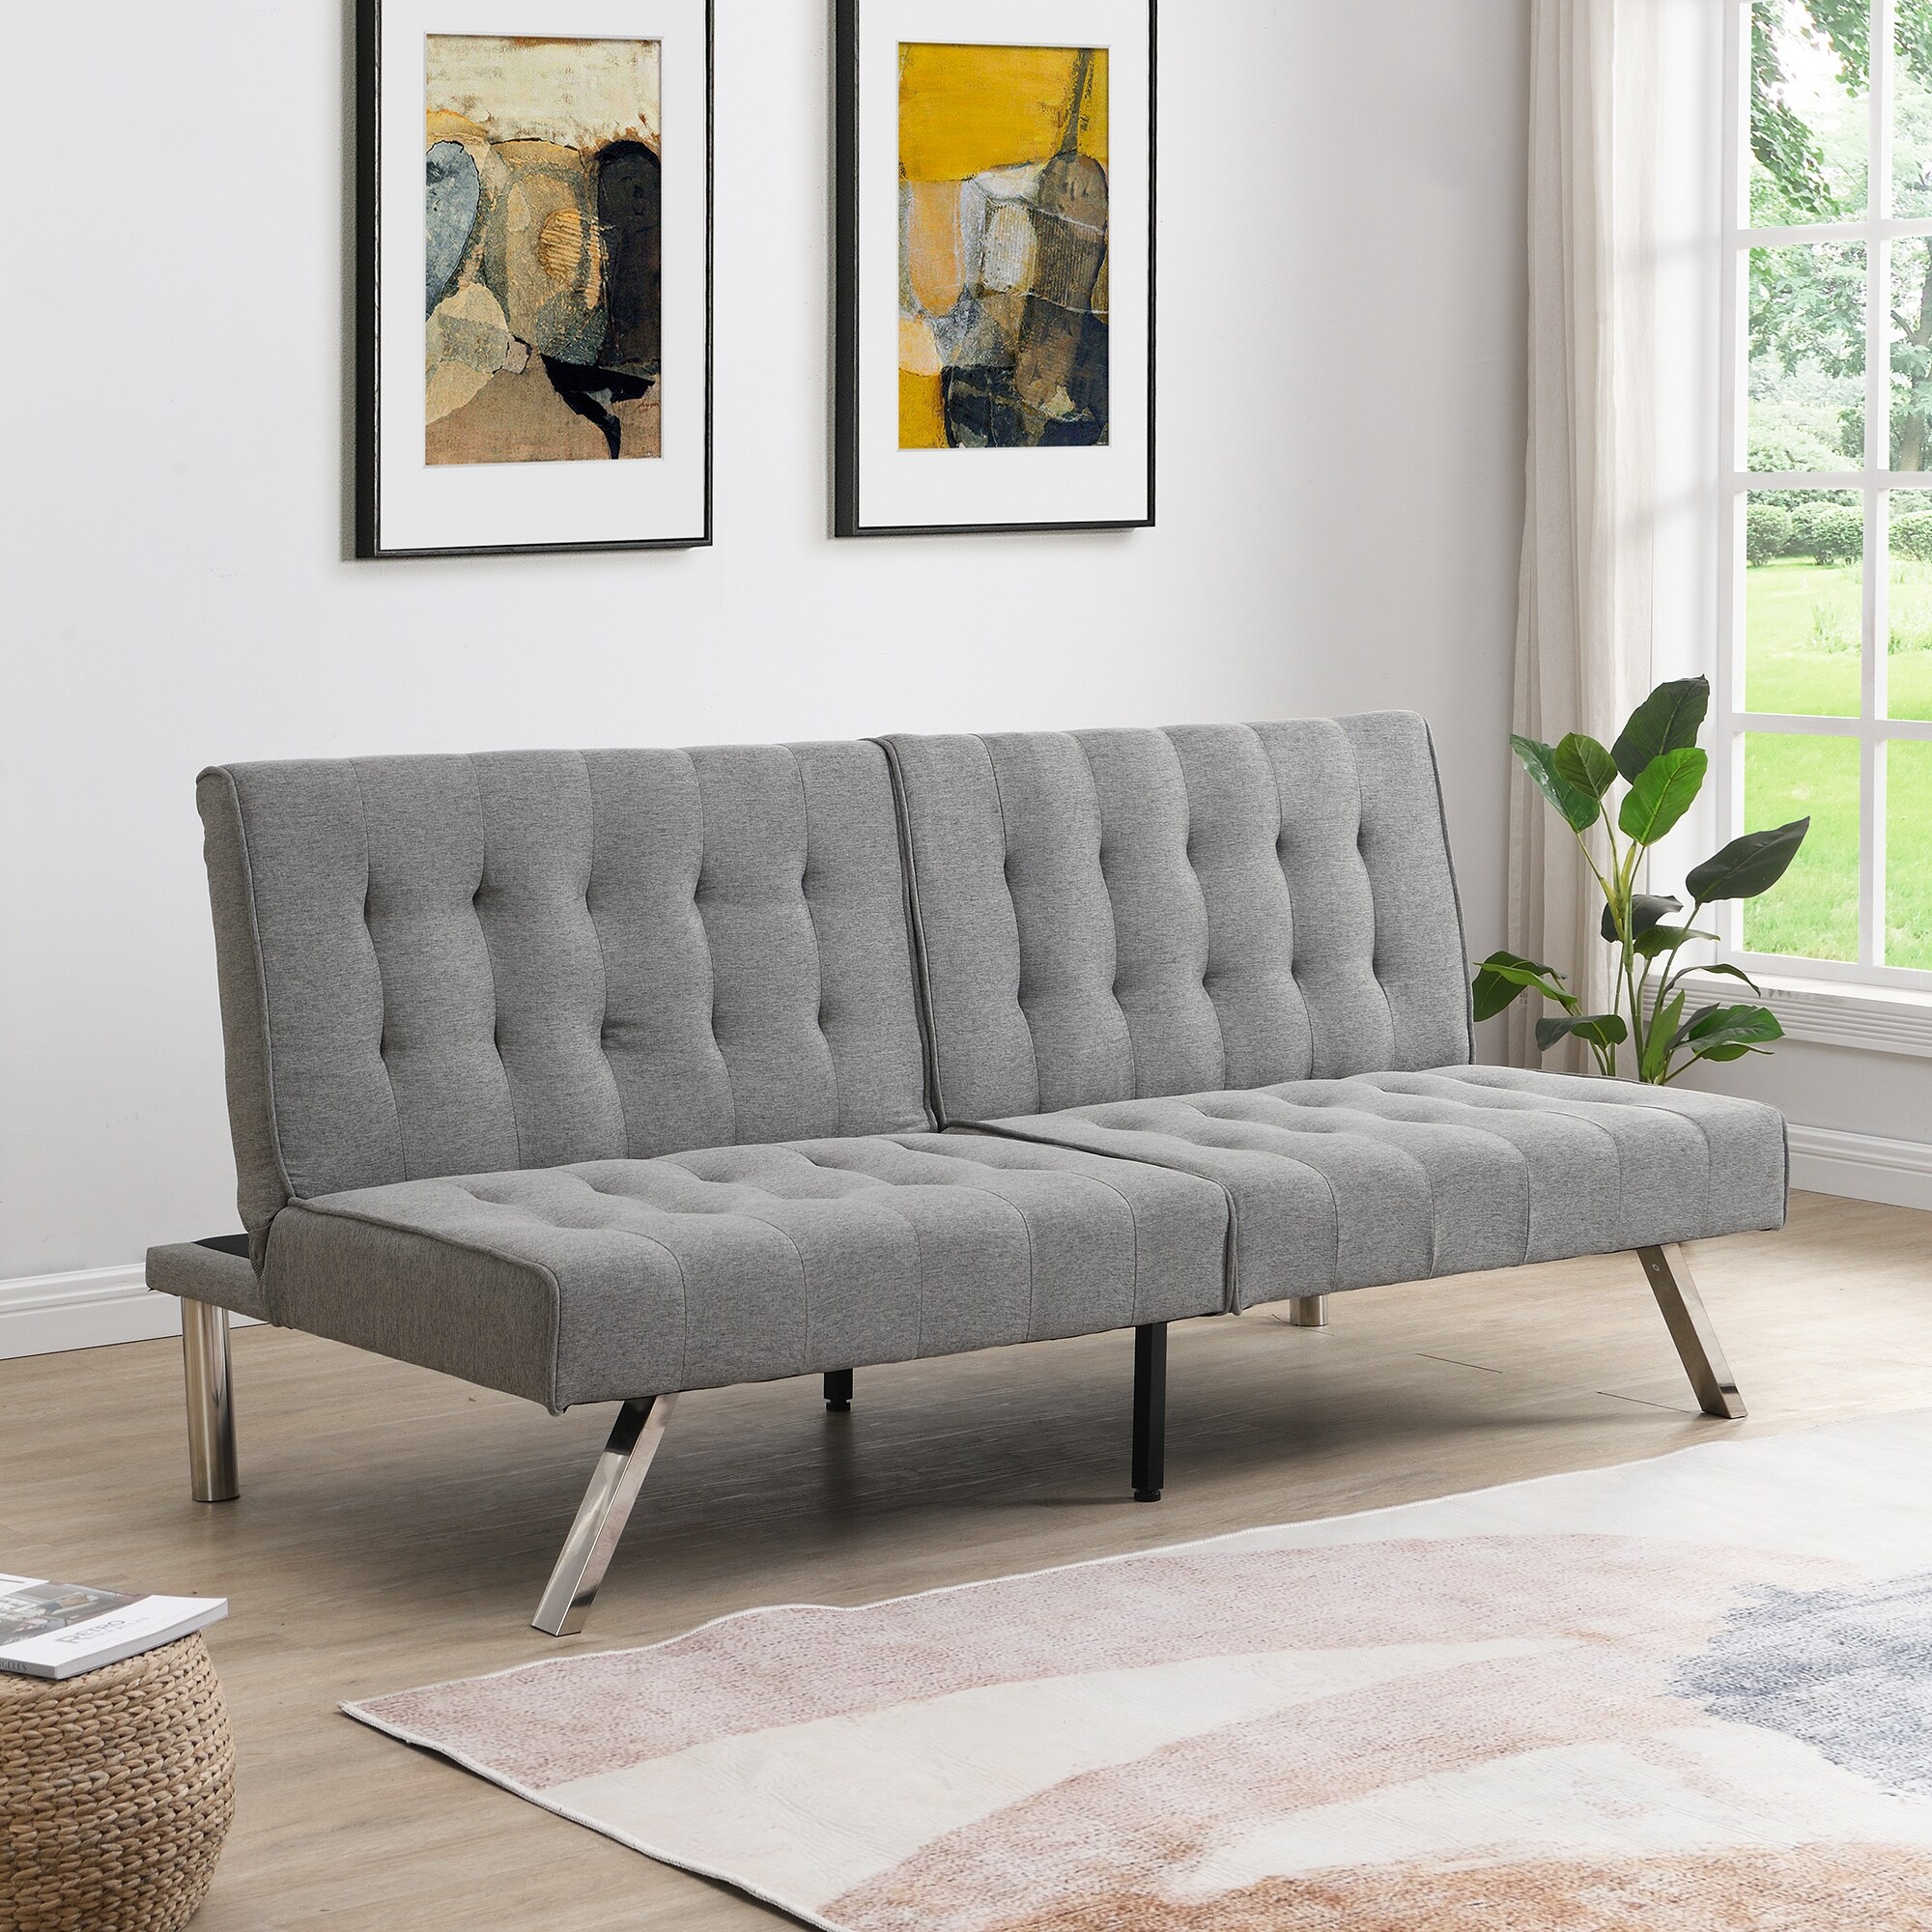 Convertible Memory Foam Futon Couch Bed, Modern Folding Sleeper